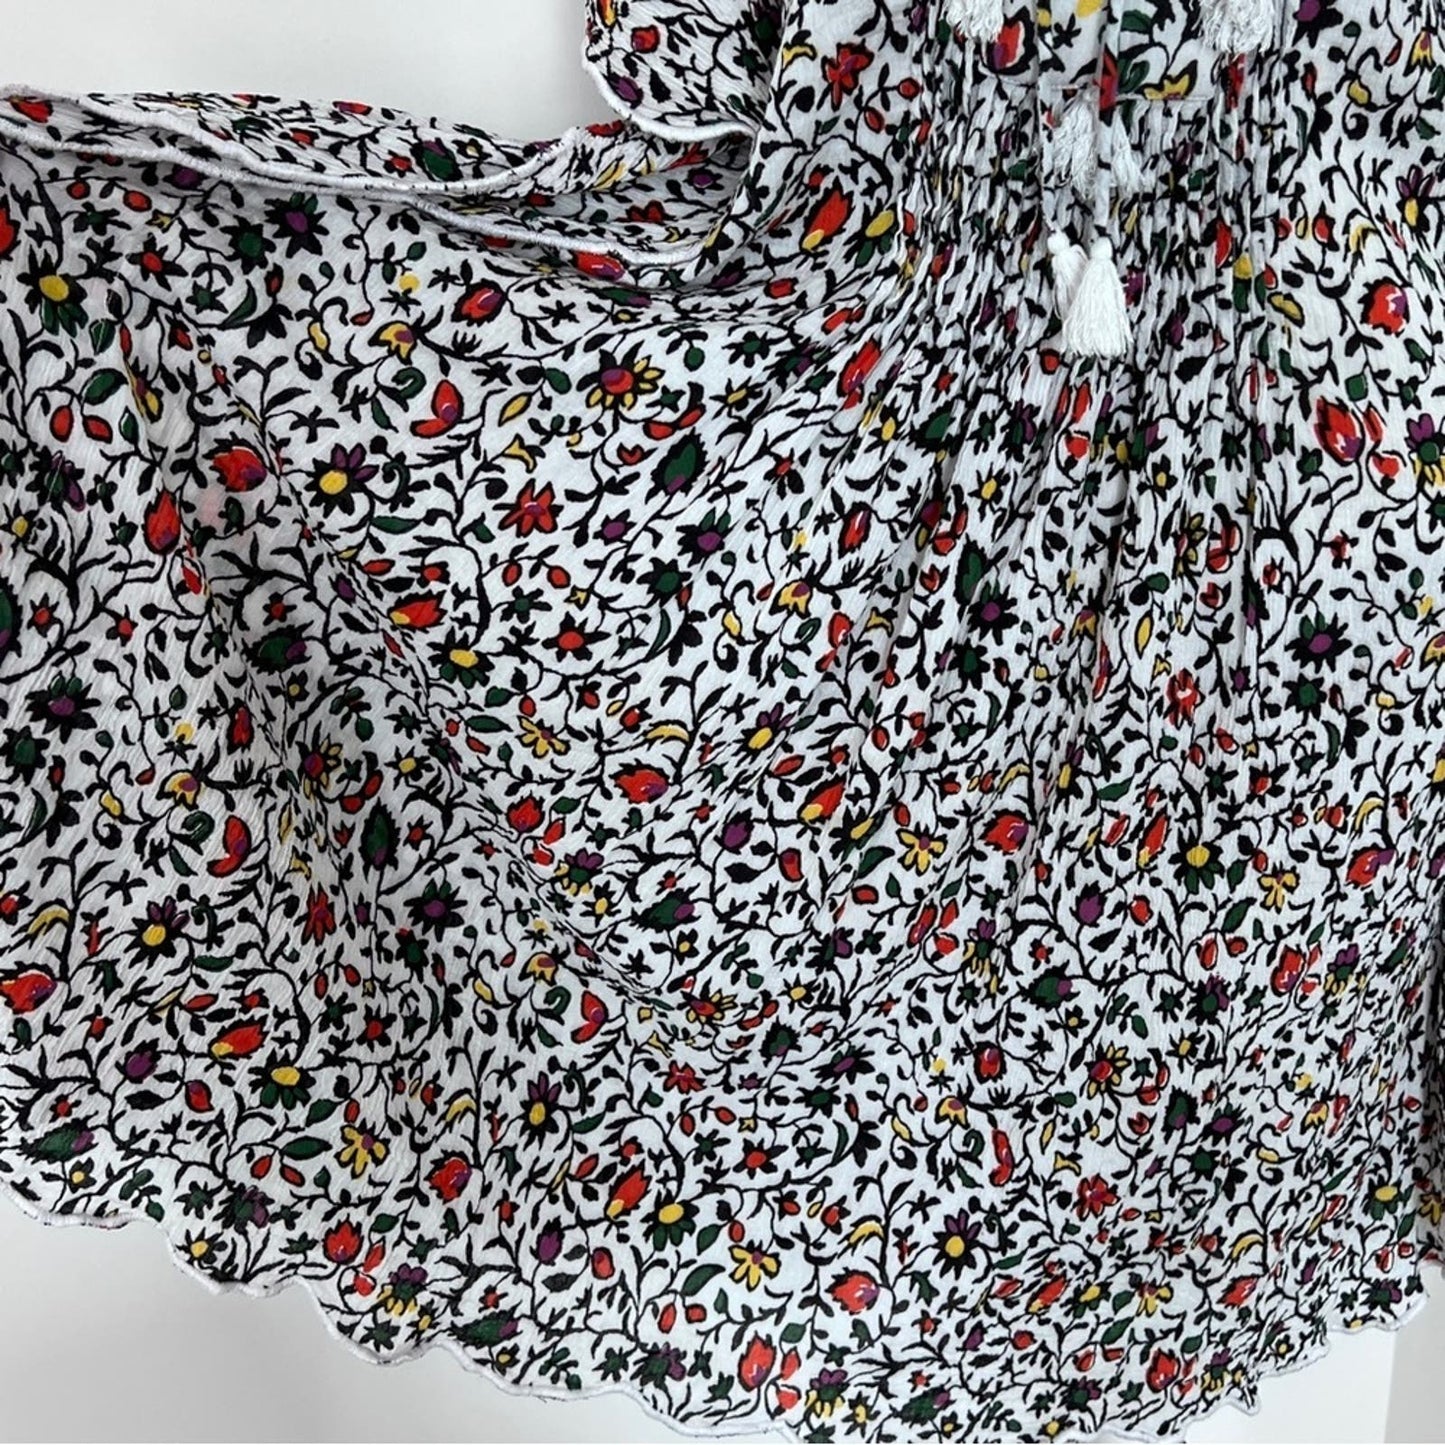 Club Monaco Multi-Color Tassel Cover up Dress size XS (398)